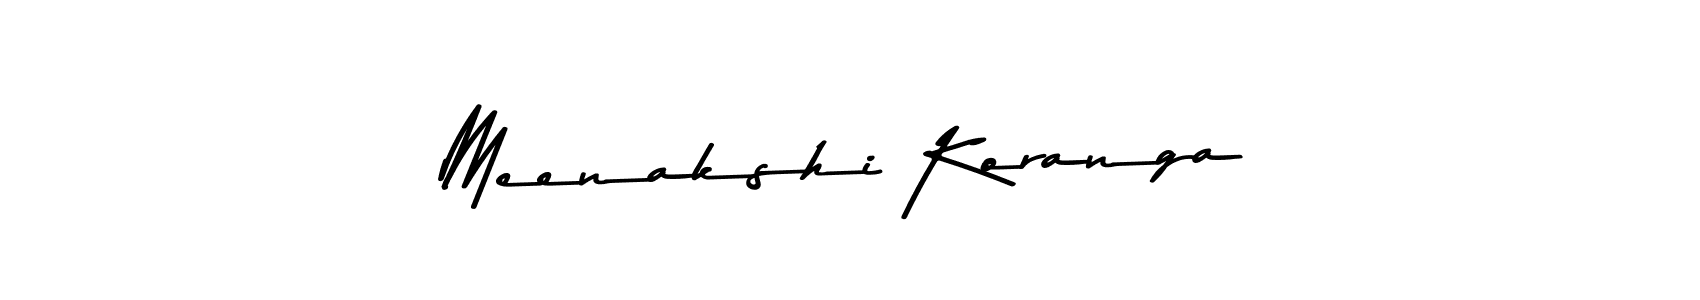 Make a beautiful signature design for name Meenakshi Koranga. Use this online signature maker to create a handwritten signature for free. Meenakshi Koranga signature style 9 images and pictures png